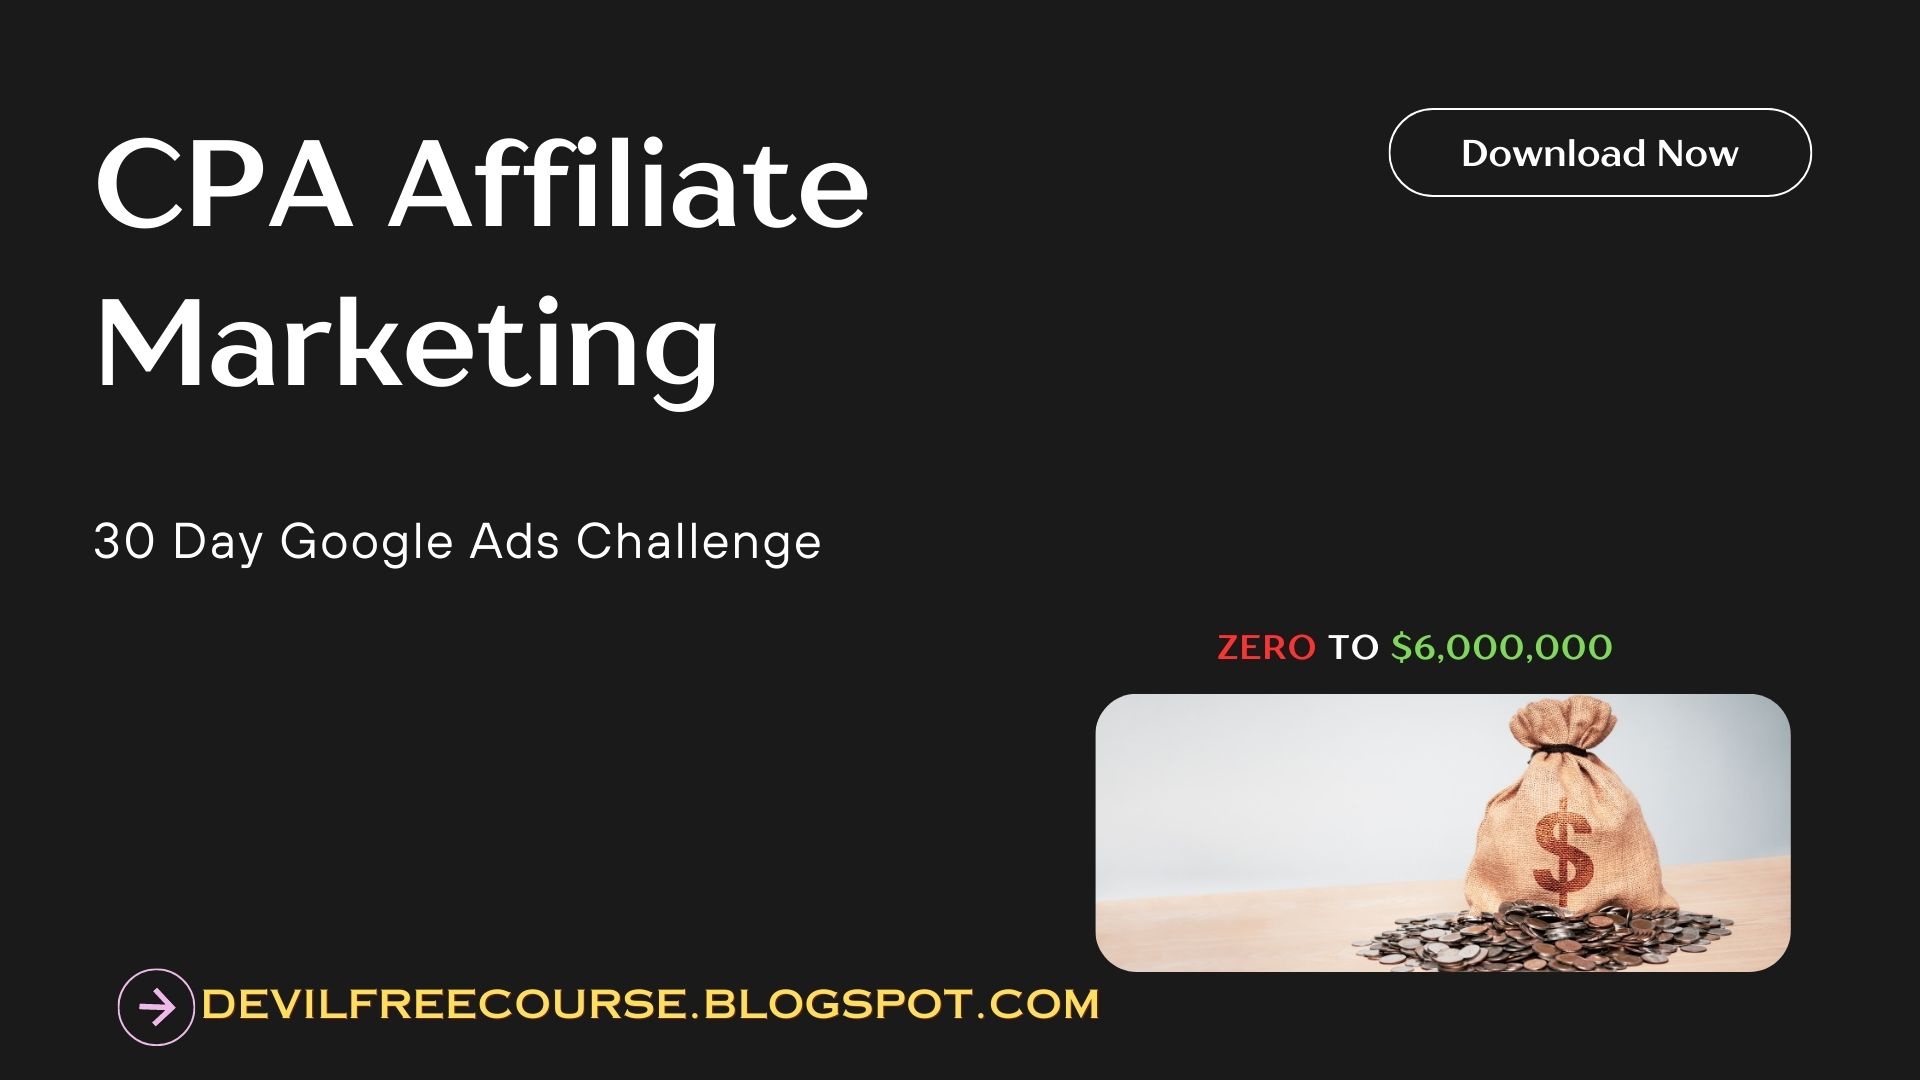 [Zero To $6,000,000] CPA Affiliate Marketing - 30 Day Google Ads Challenge - DevilFreeCourse